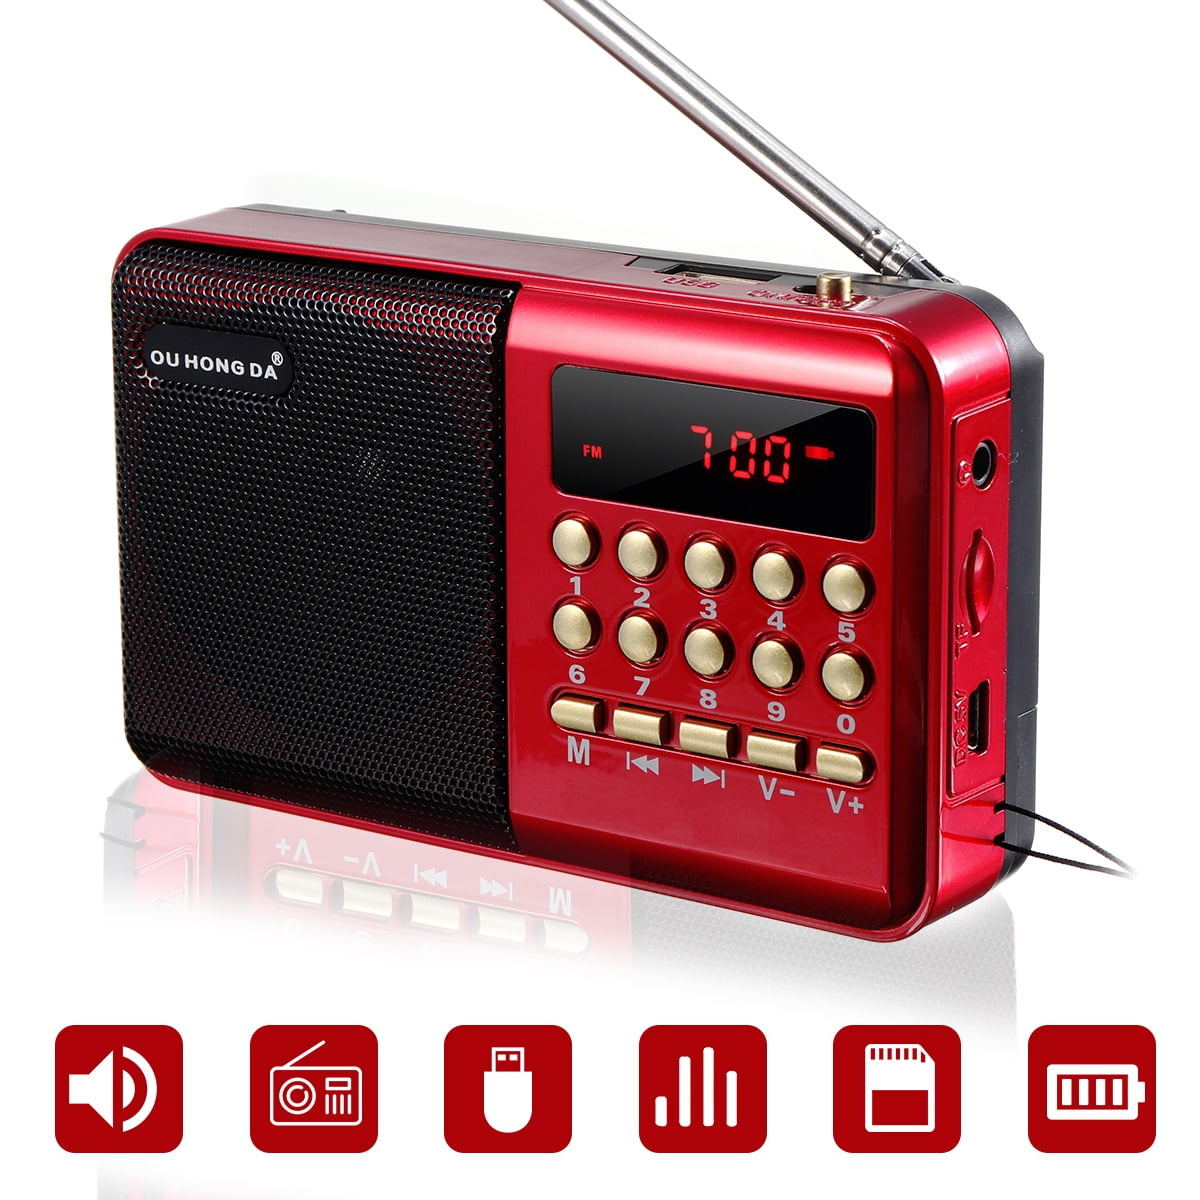 Cdrox Elder Mini BC-R28 Pocket Radio Portatile AM ​​Wireless Receiver Set Music Player FM